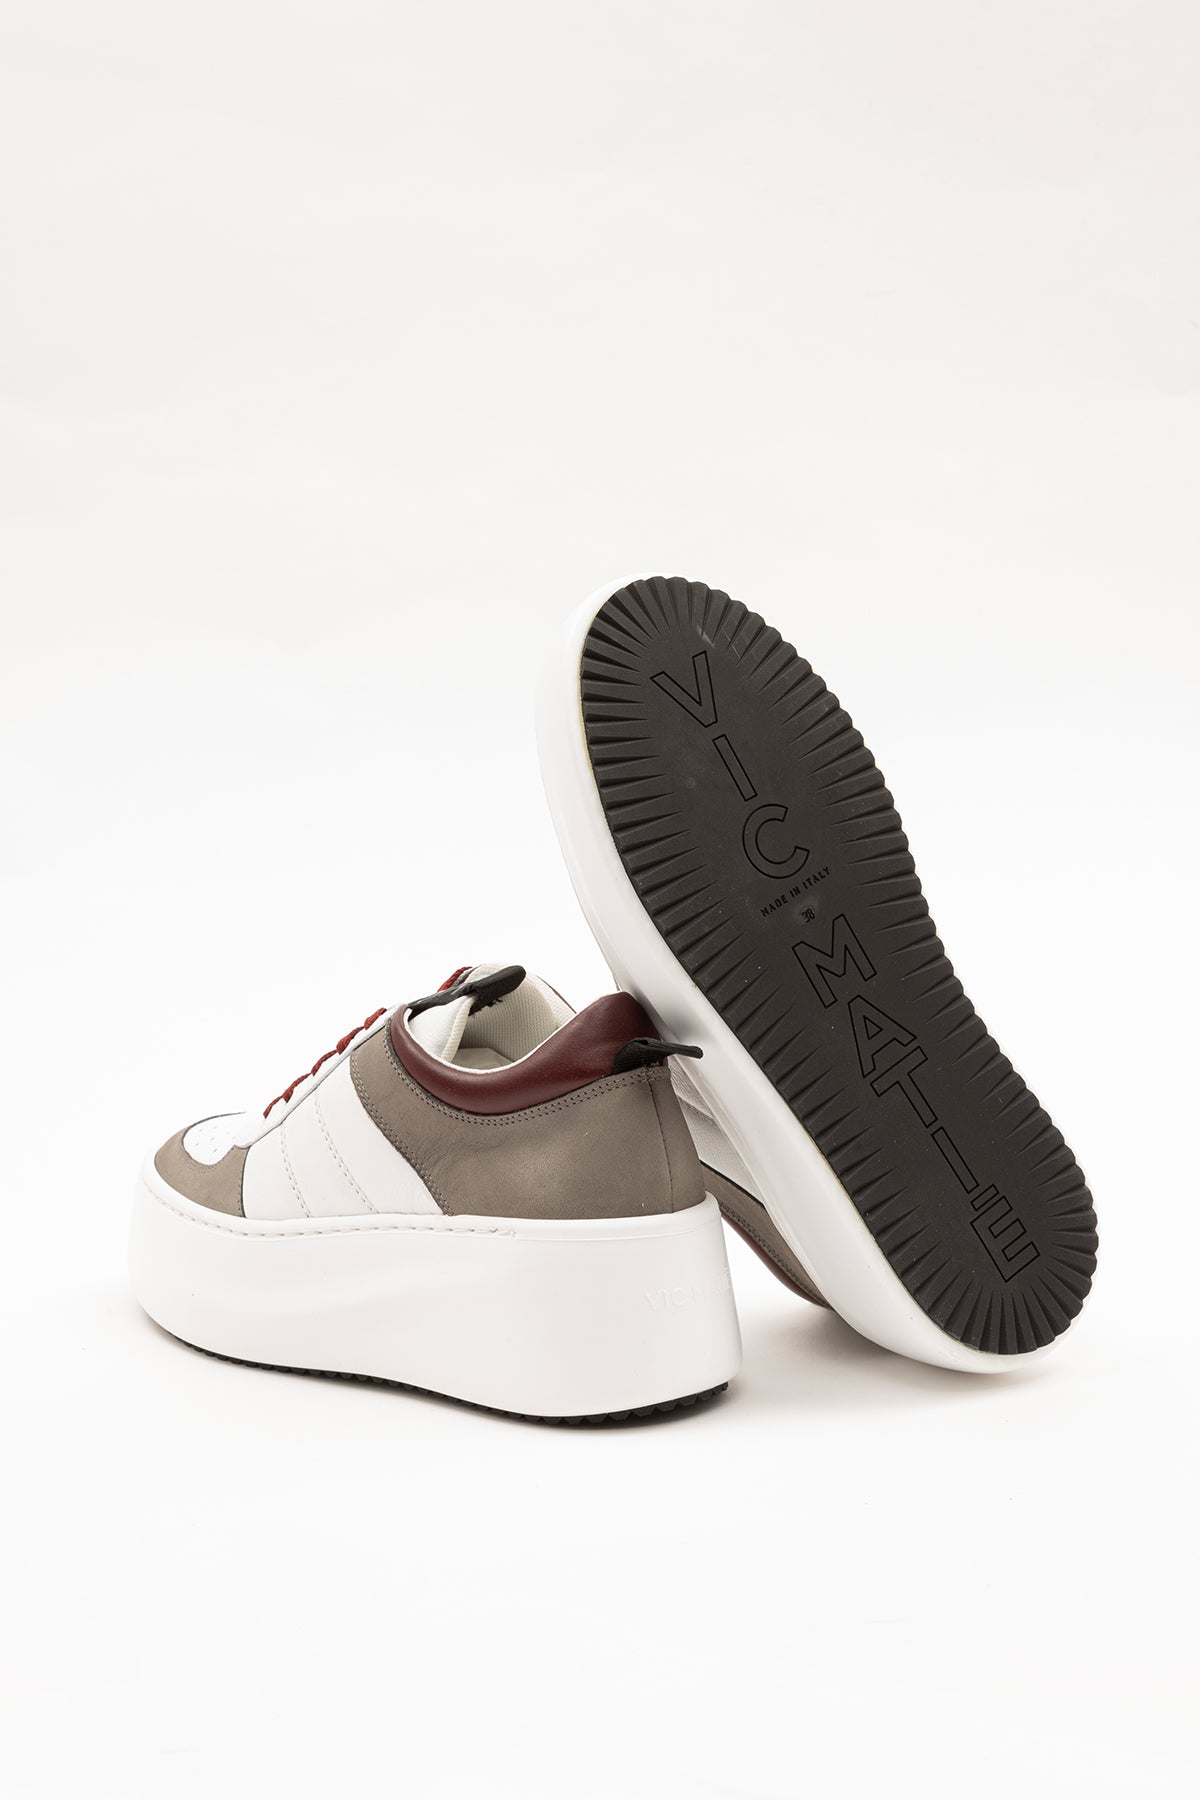 Vic Matie Deri Sneaker Ayakkabı-Libas Trendy Fashion Store